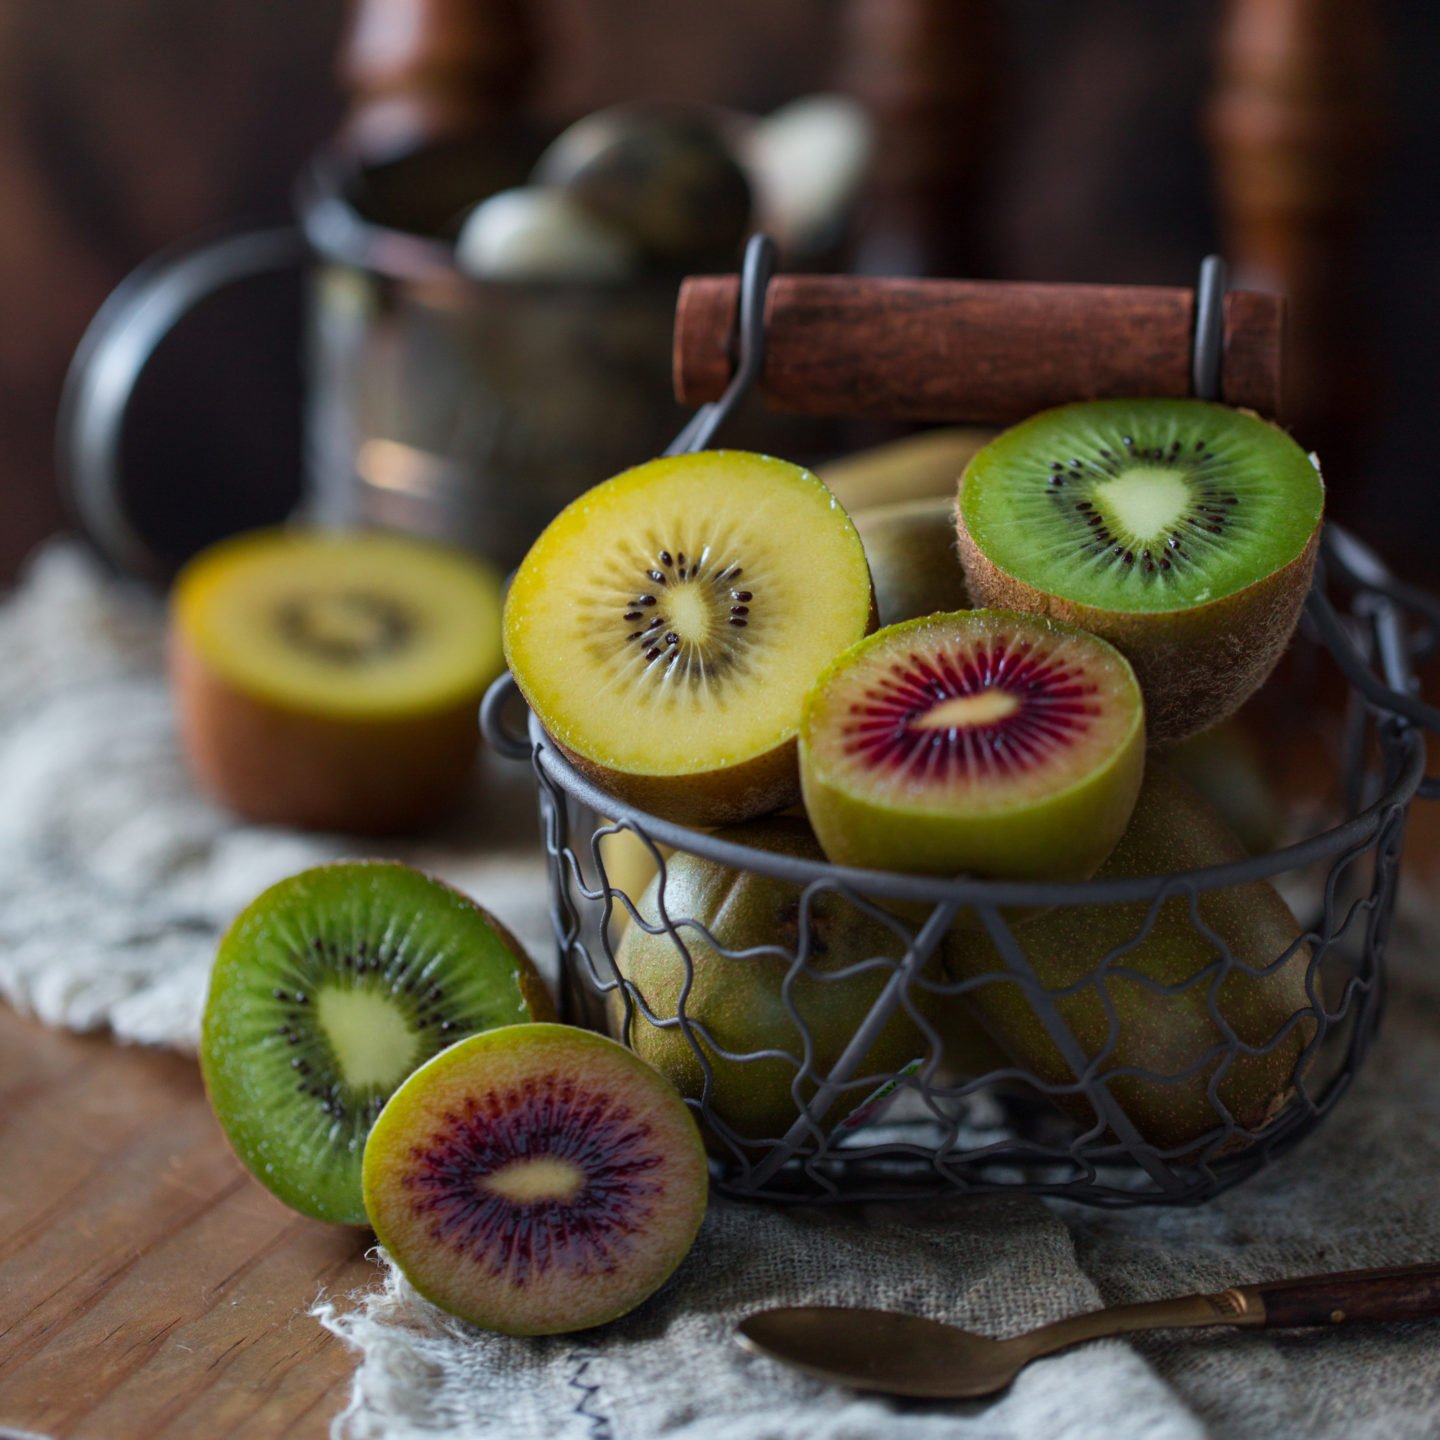 kiwi fruits varieties